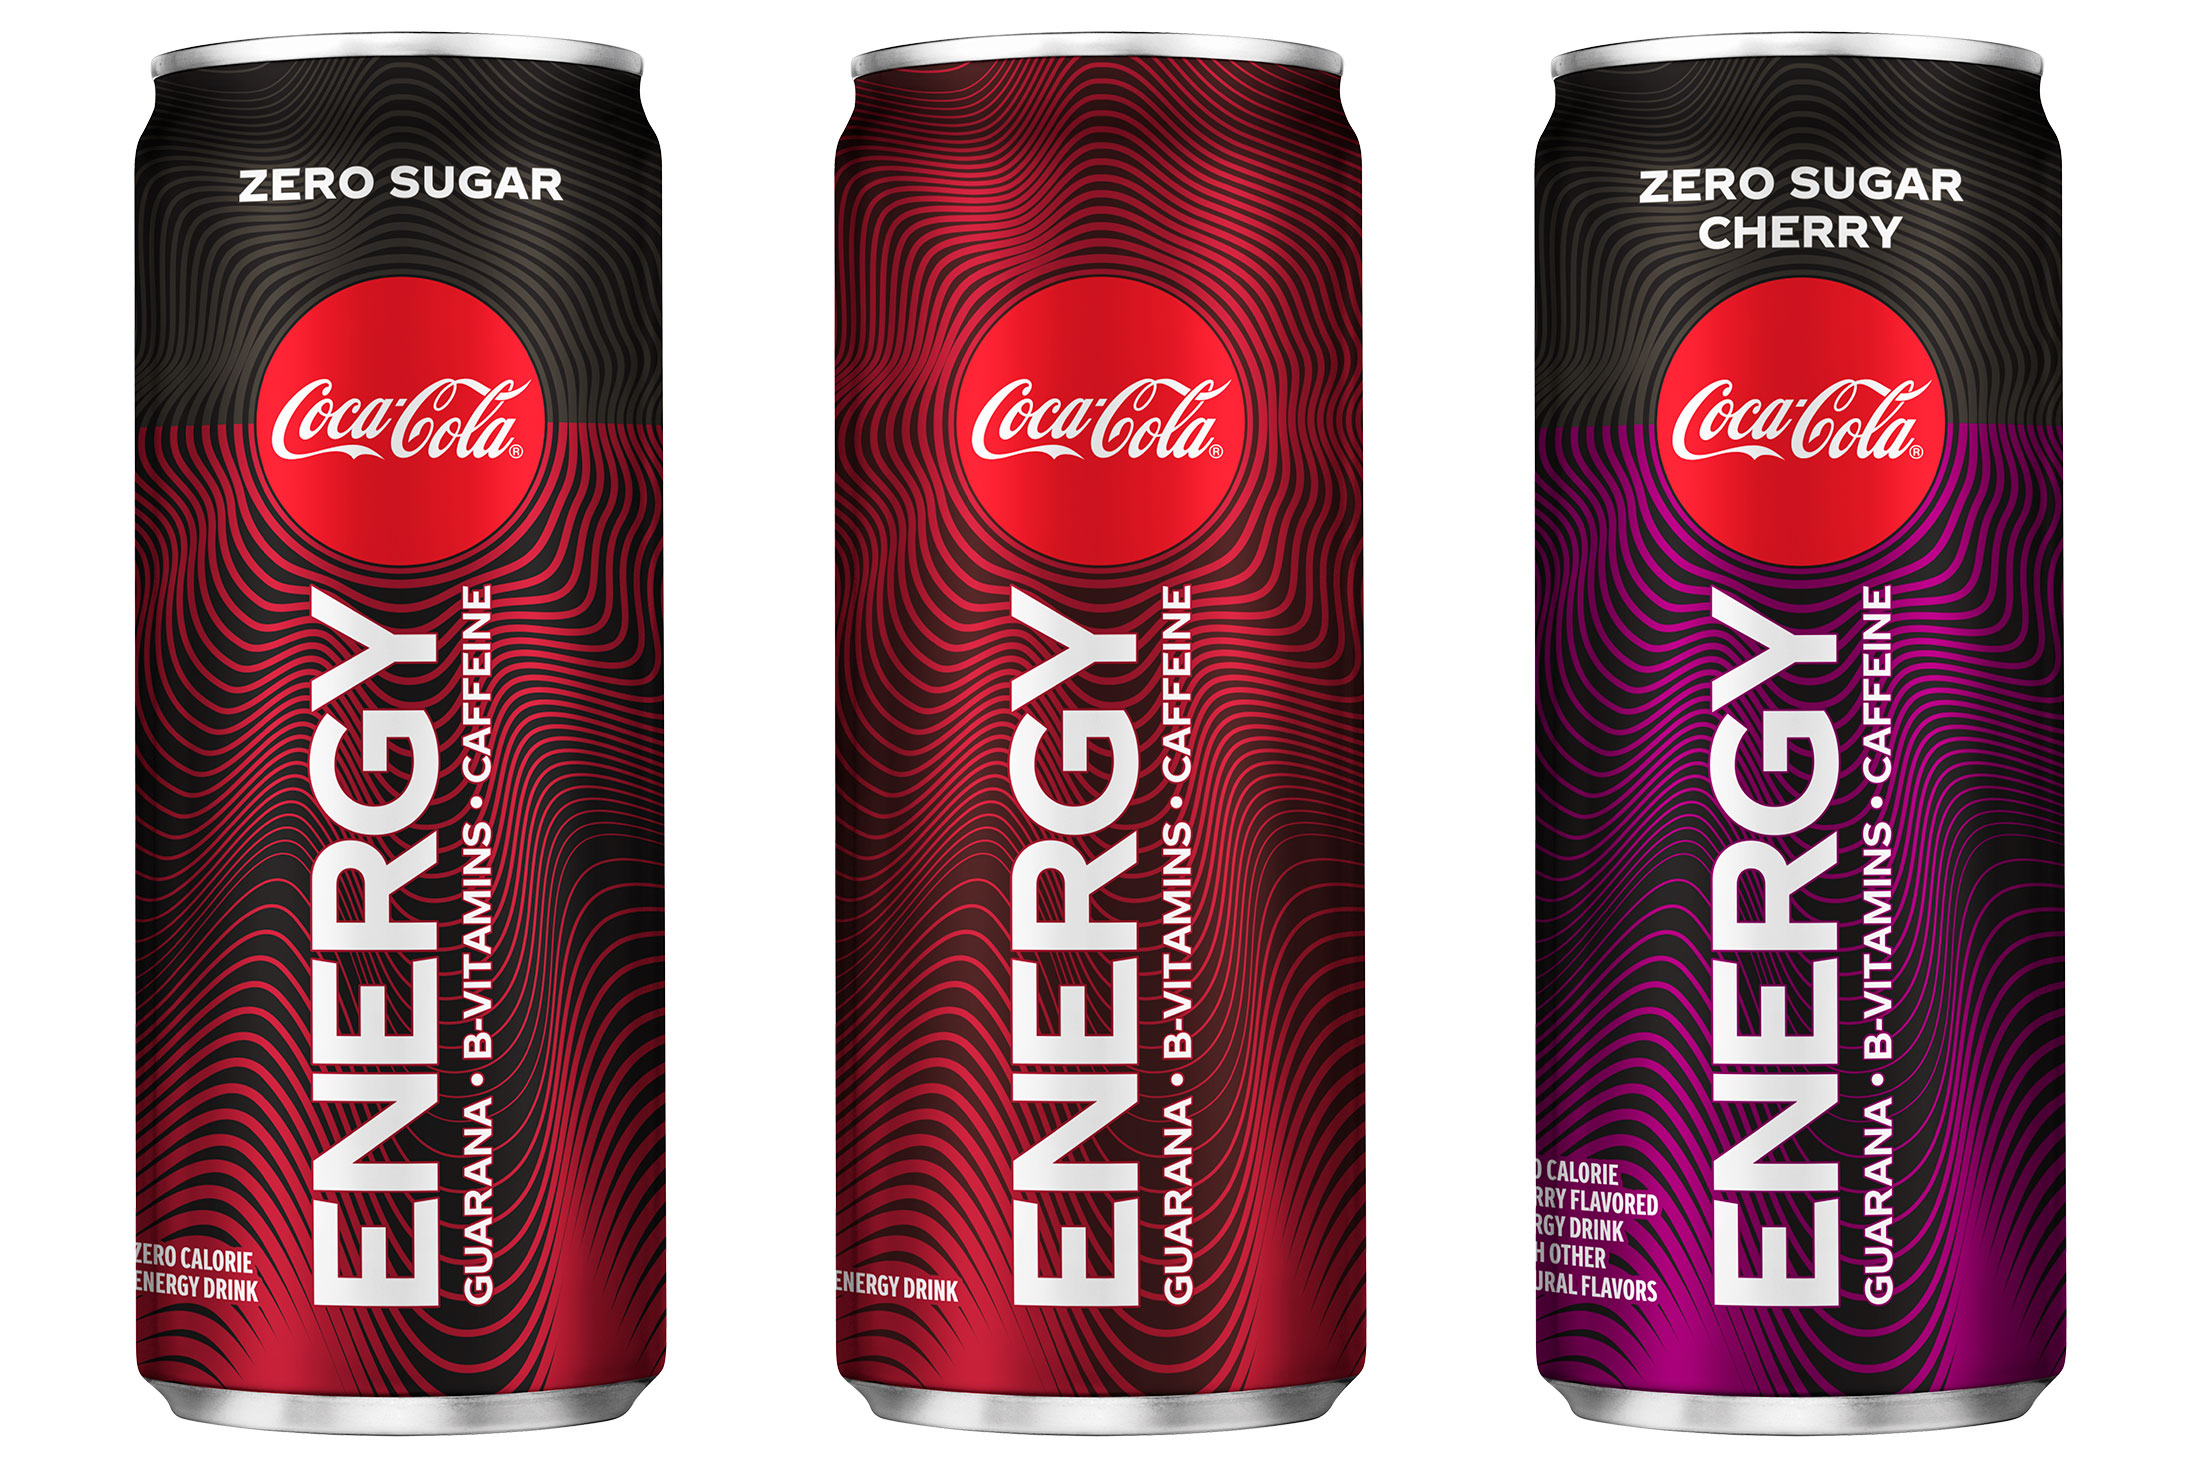 Coca-Cola discontinues energy drink in N.America